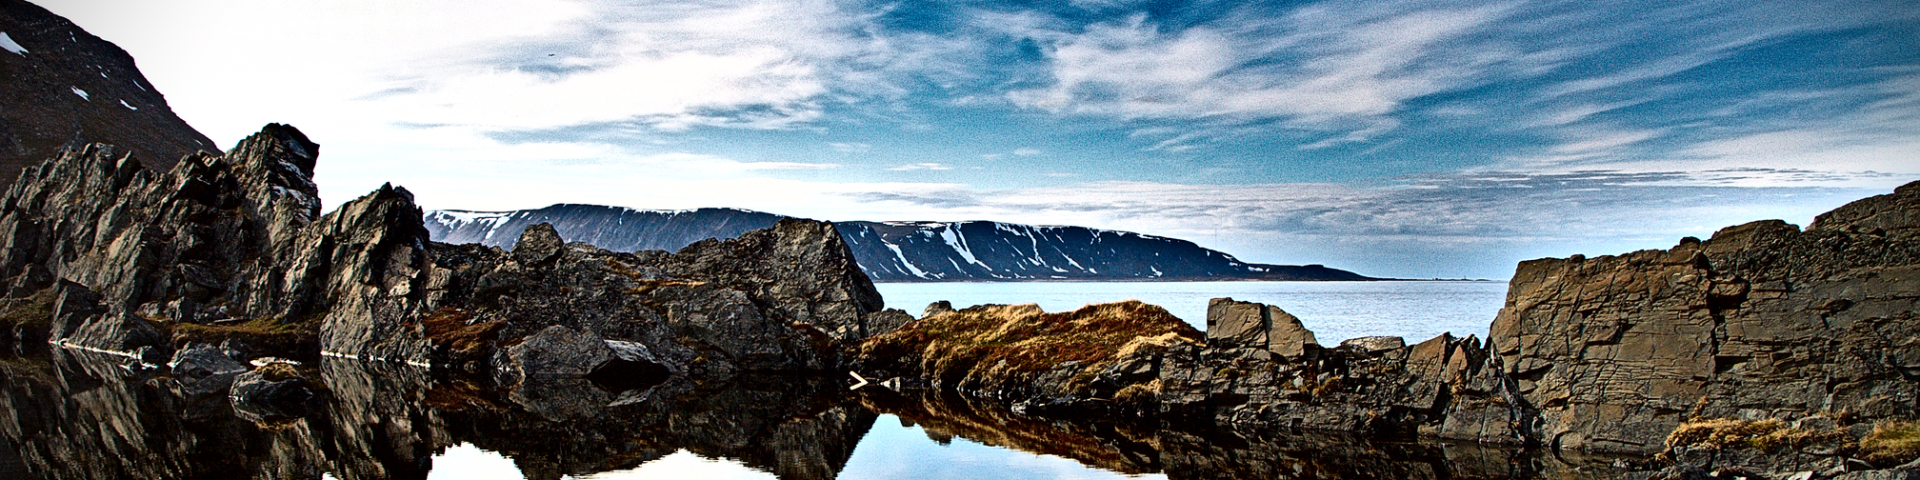 bloggen angefangen norwegsiche Landschaft am Meer Berlevåg